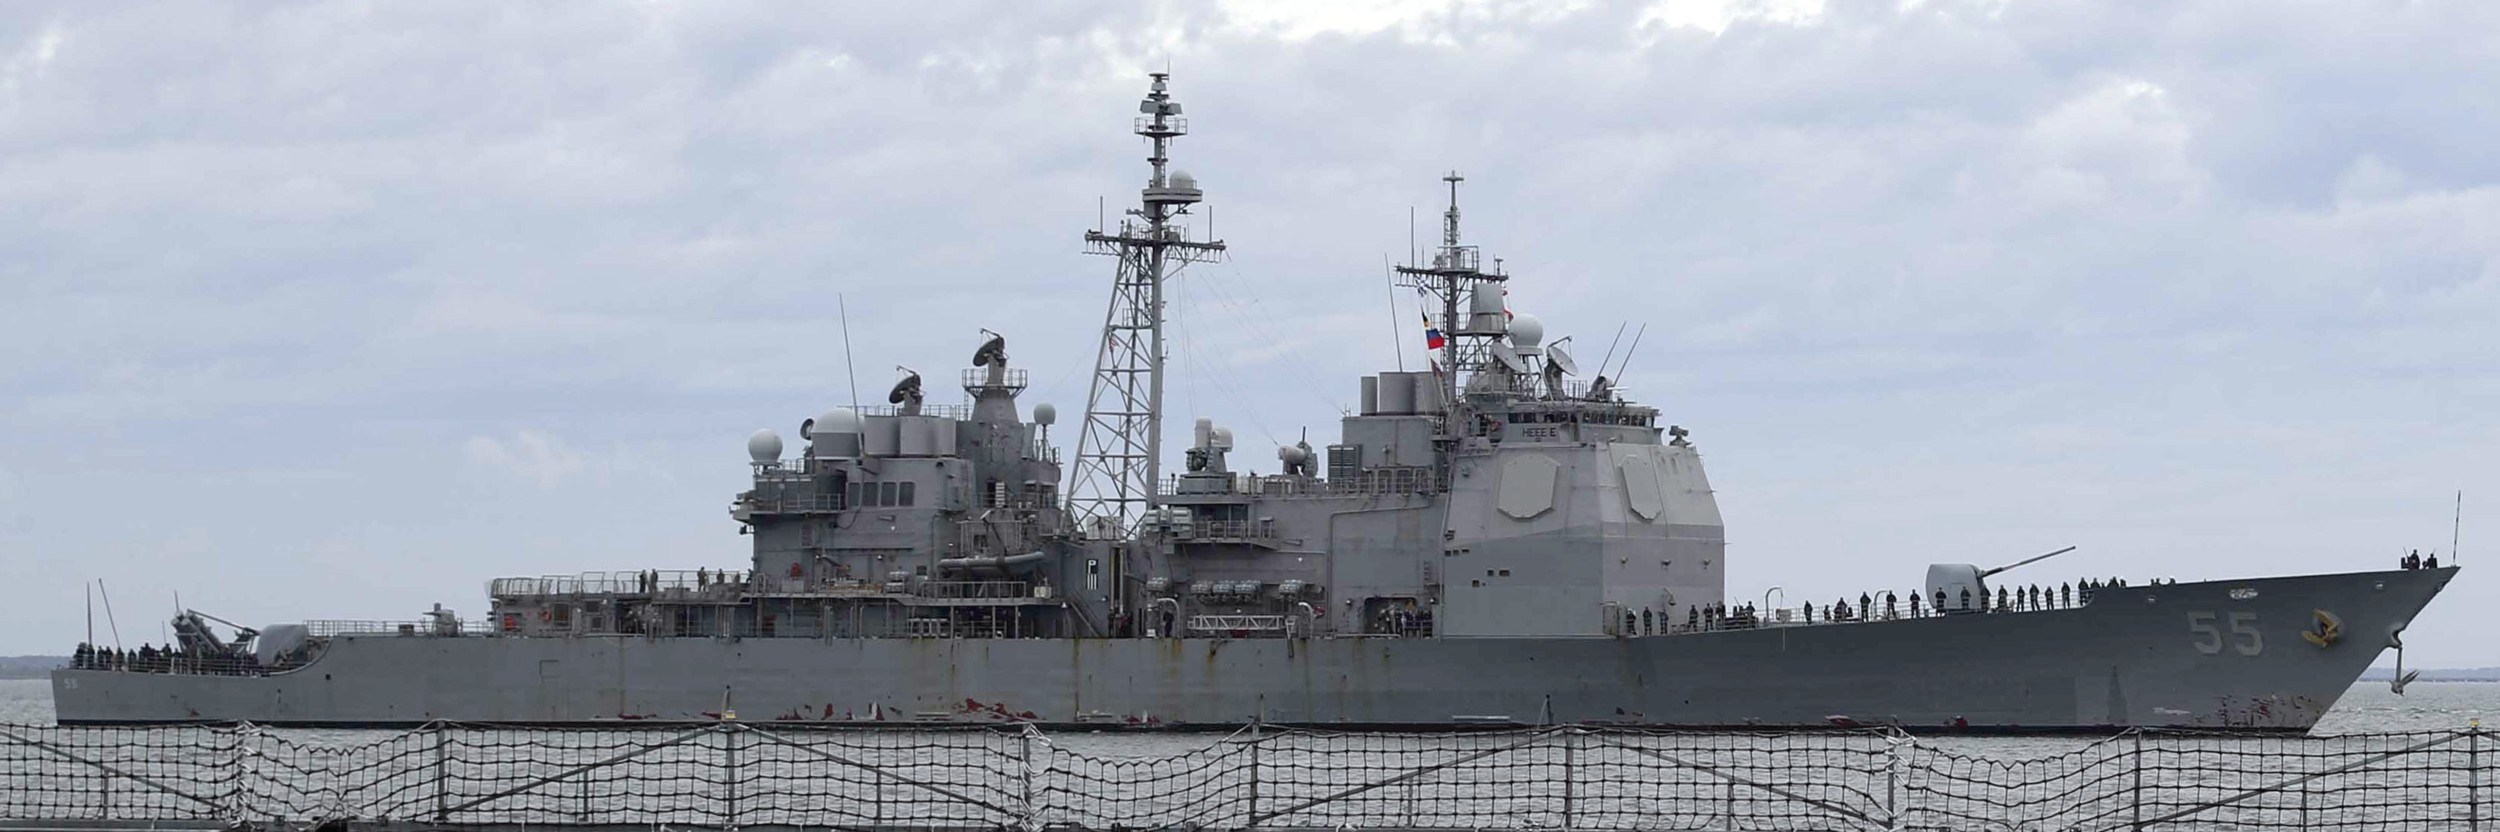 cg-55 uss leyte gulf ticonderoga class guided missile cruiser aegis us navy naval station norfolk virginia 61